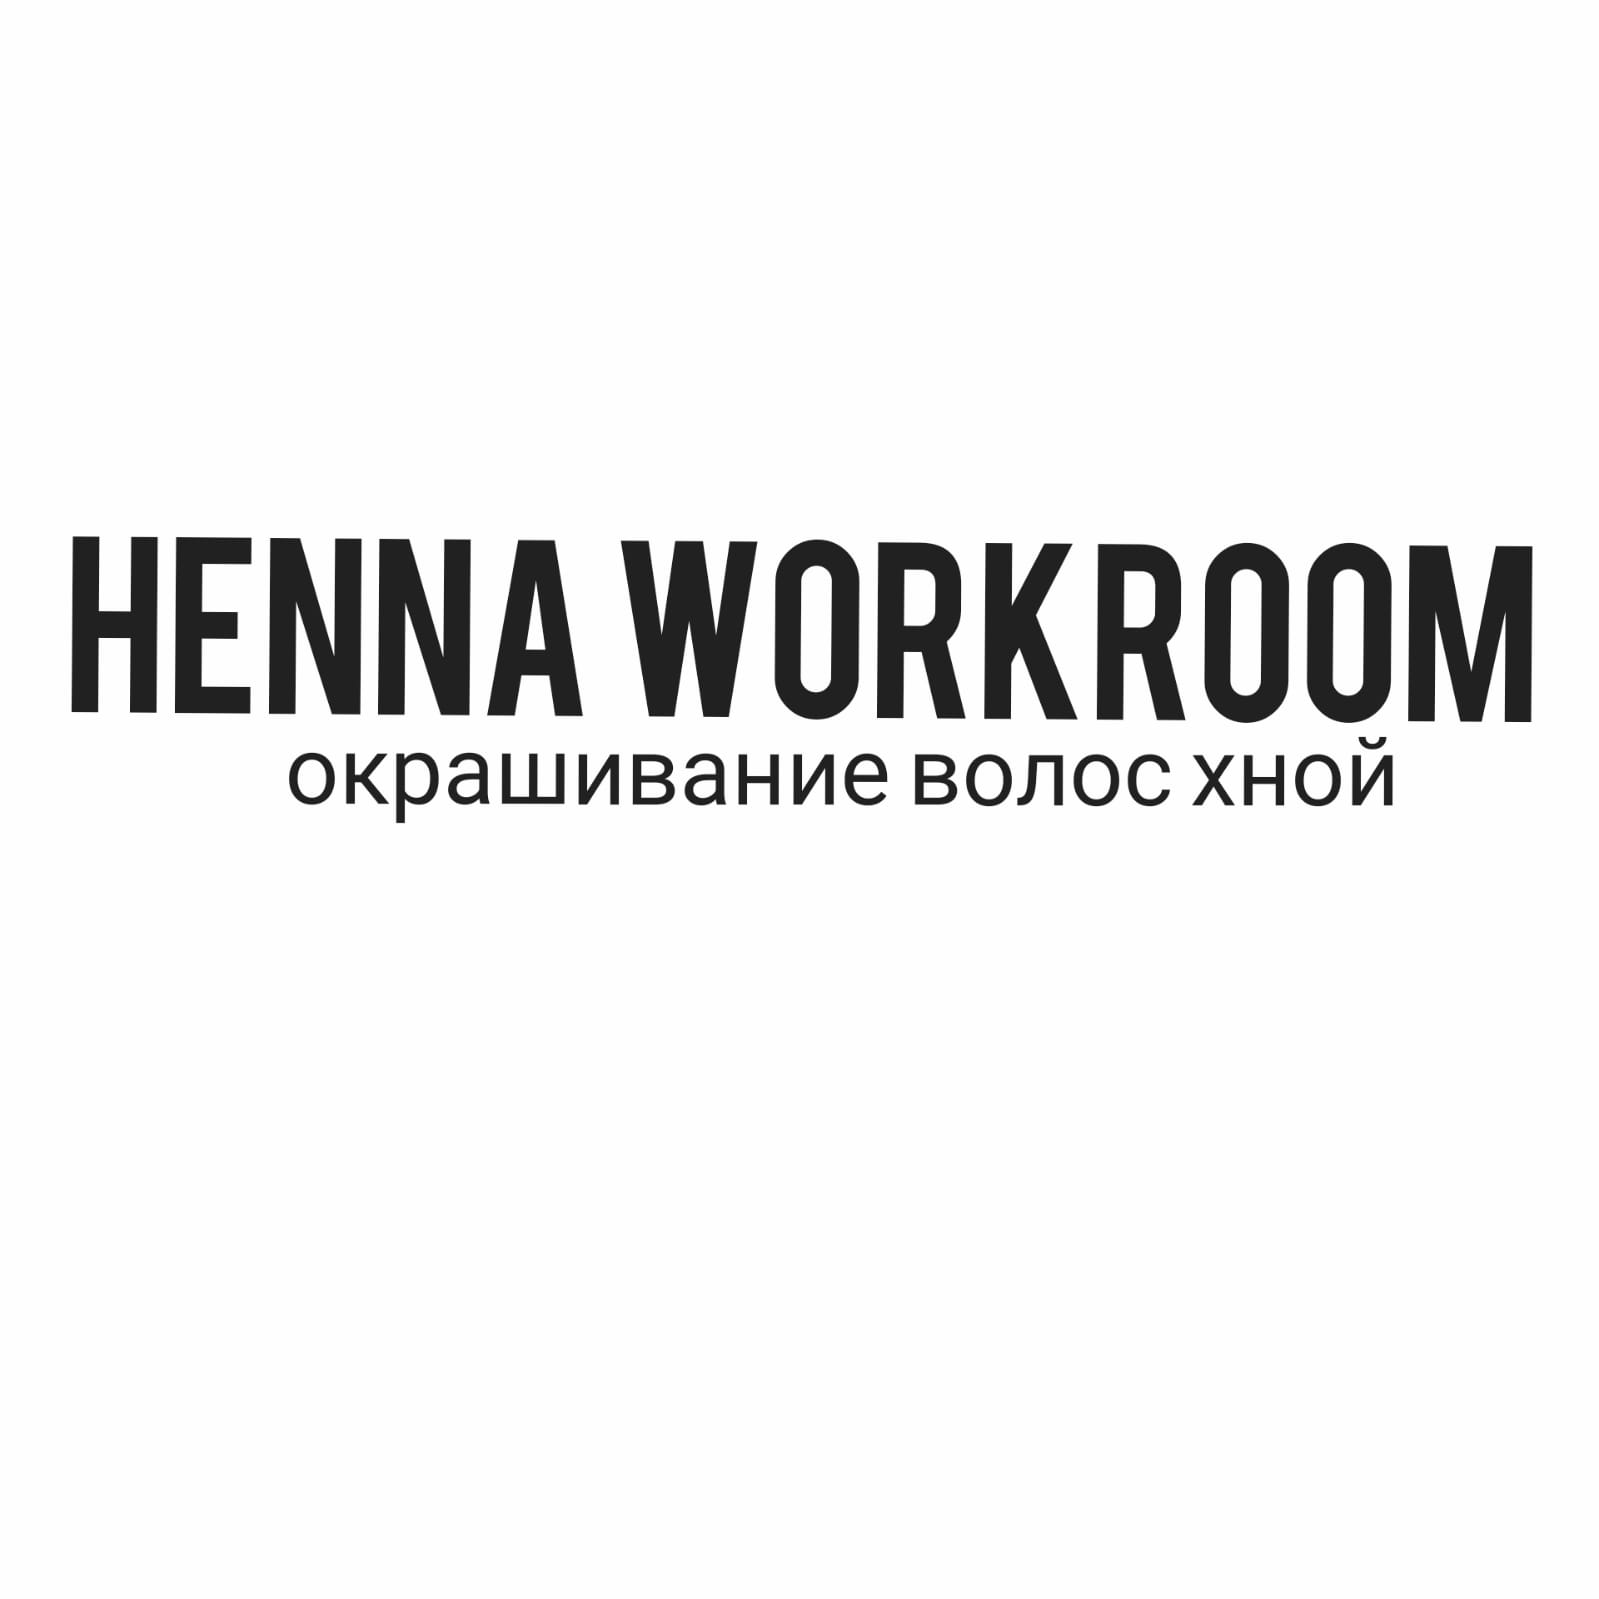 Логотип компании Салон окрашивания волос хной Henna Workroom